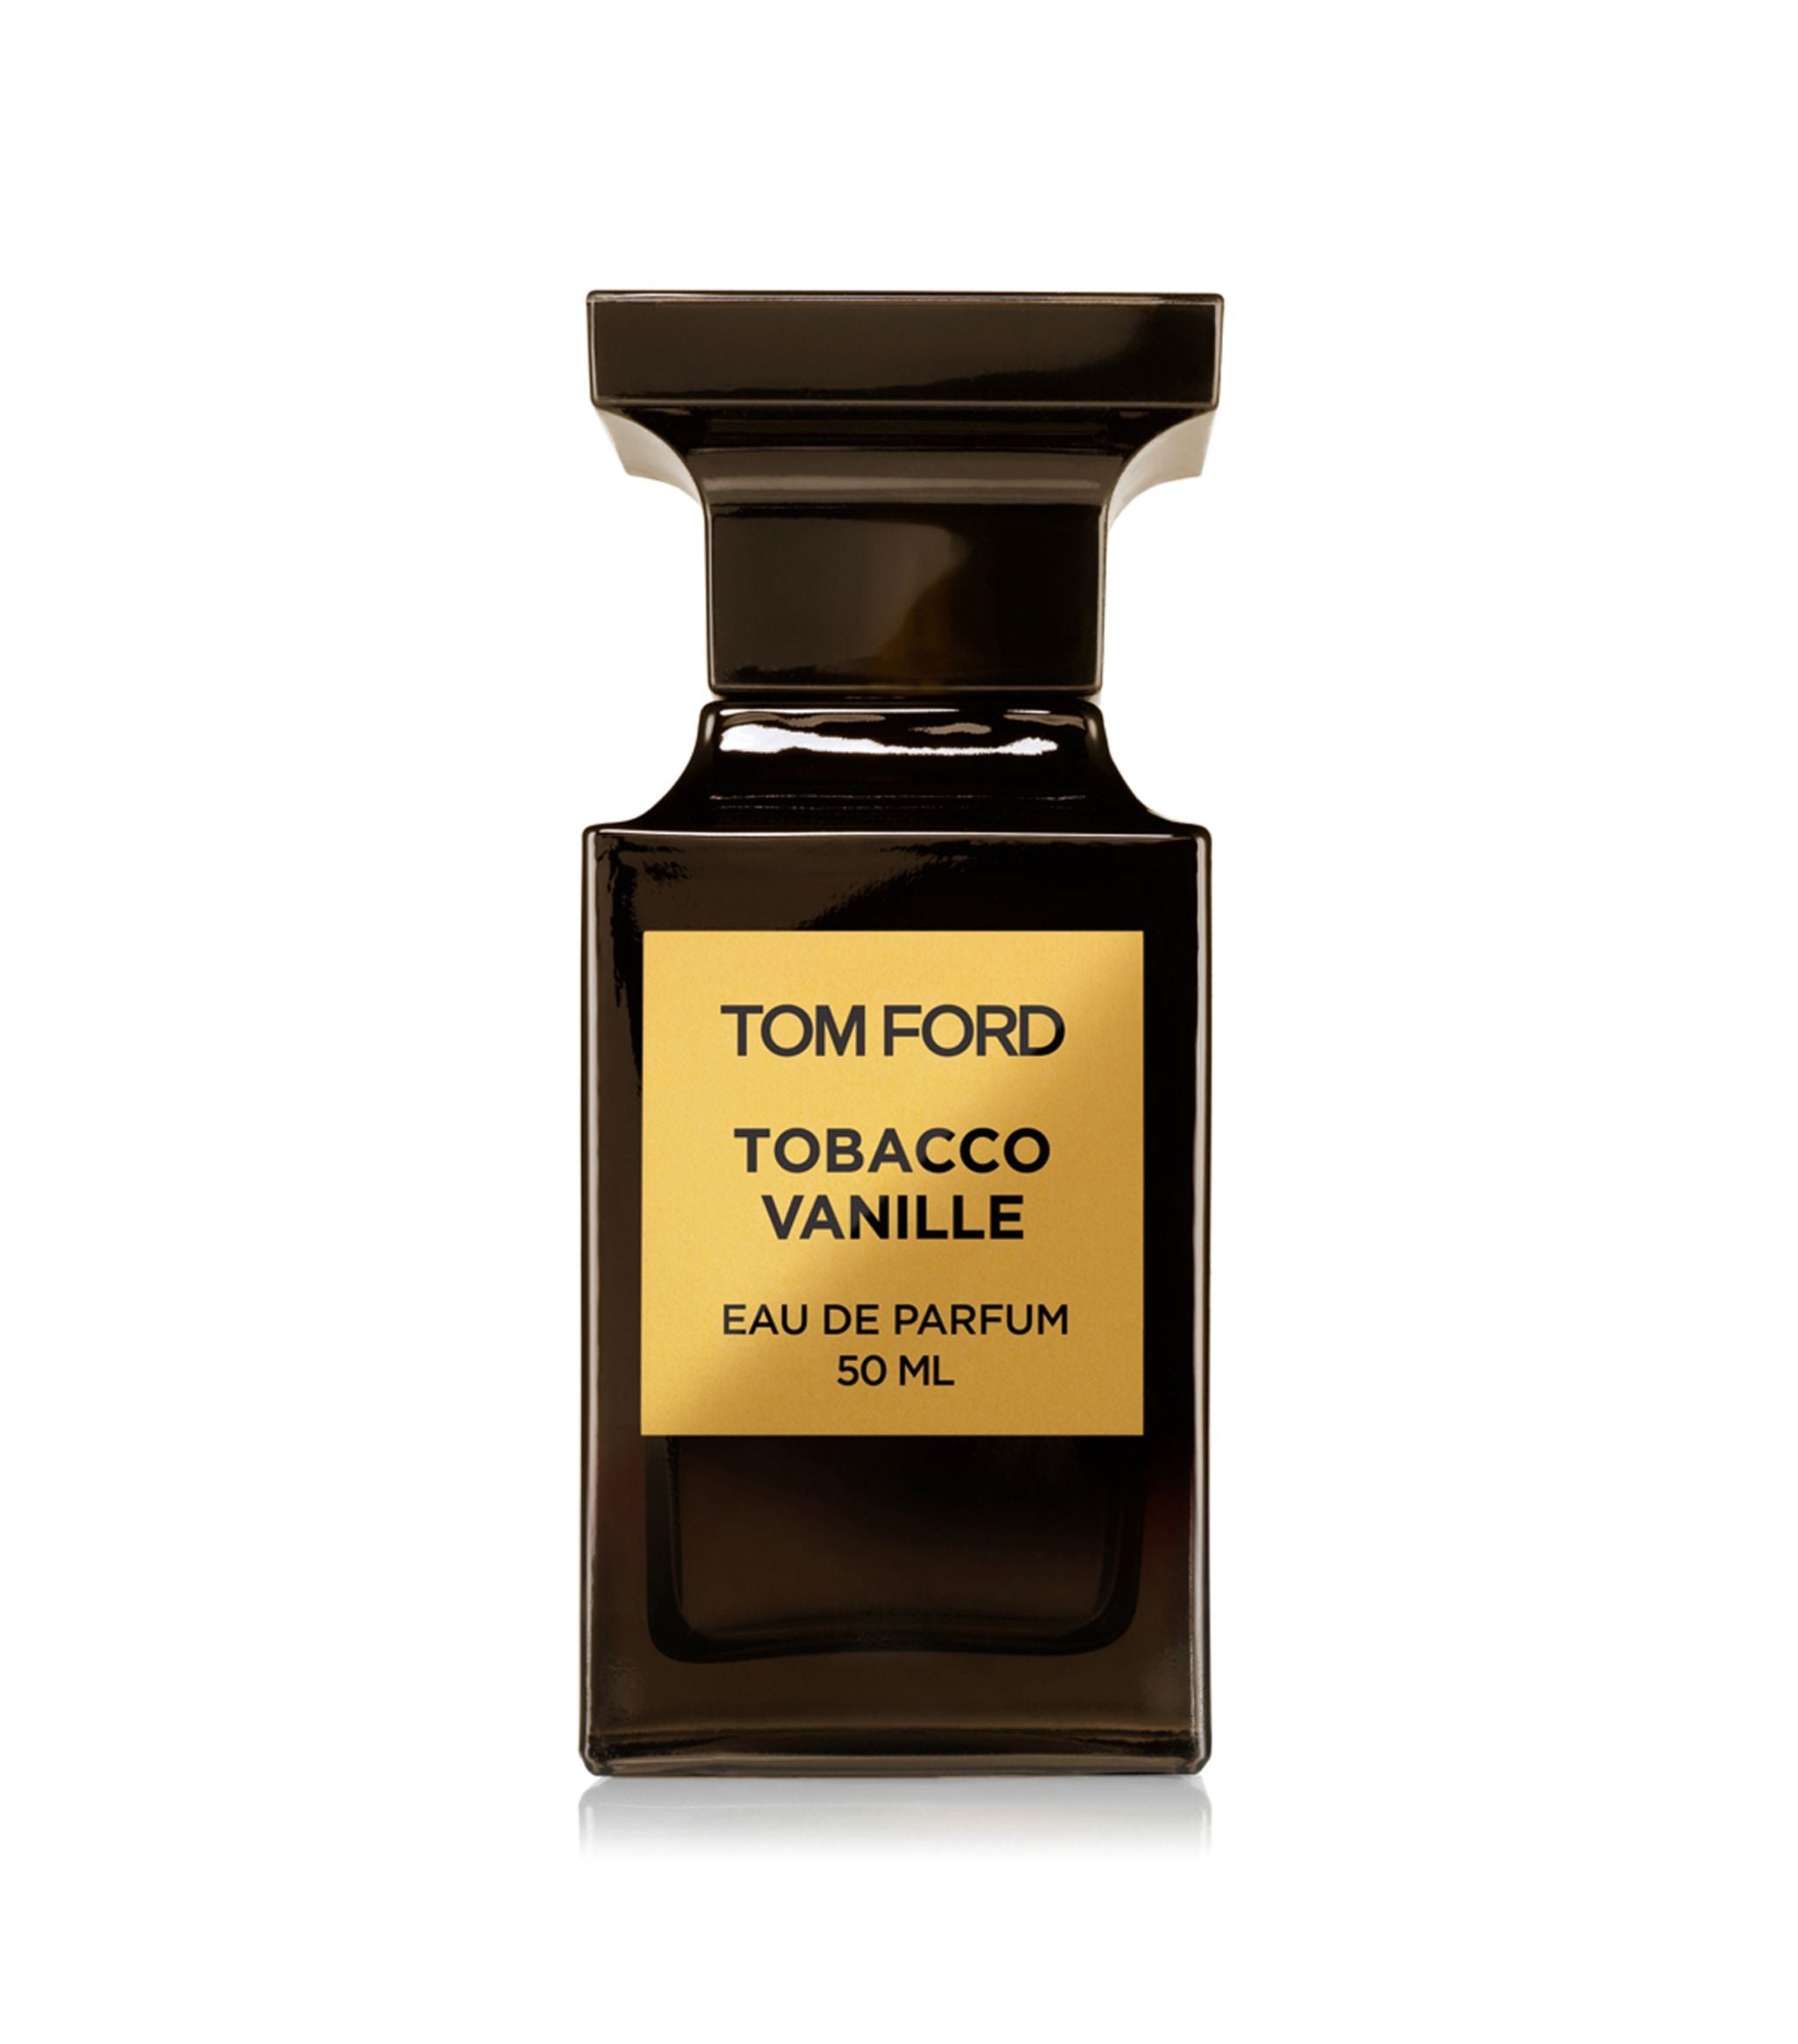 Tom Ford Tobacco Vanille Eau De Parfum Samples